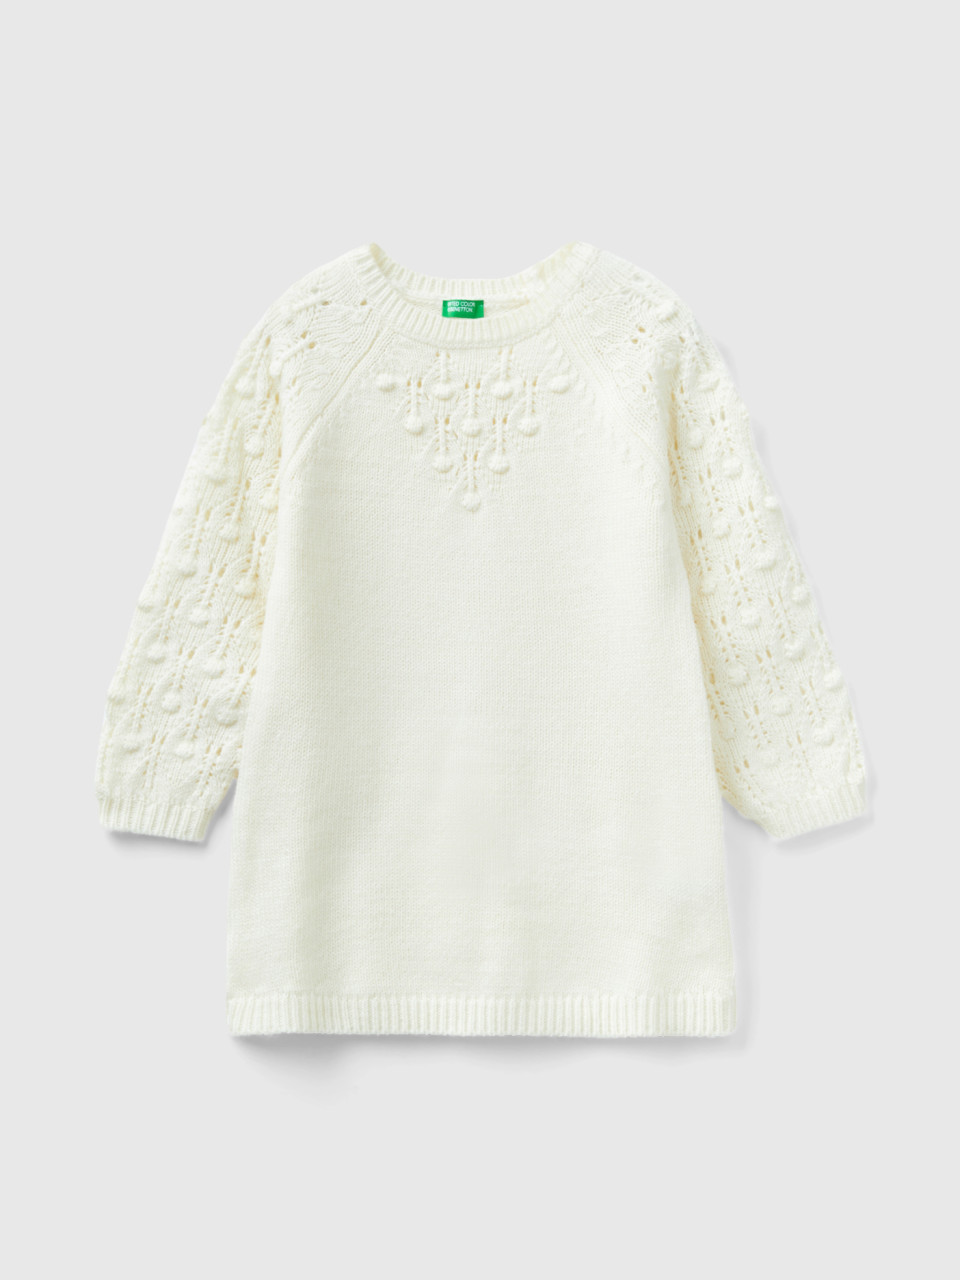 Benetton, Sweater Dress, Creamy White, Kids